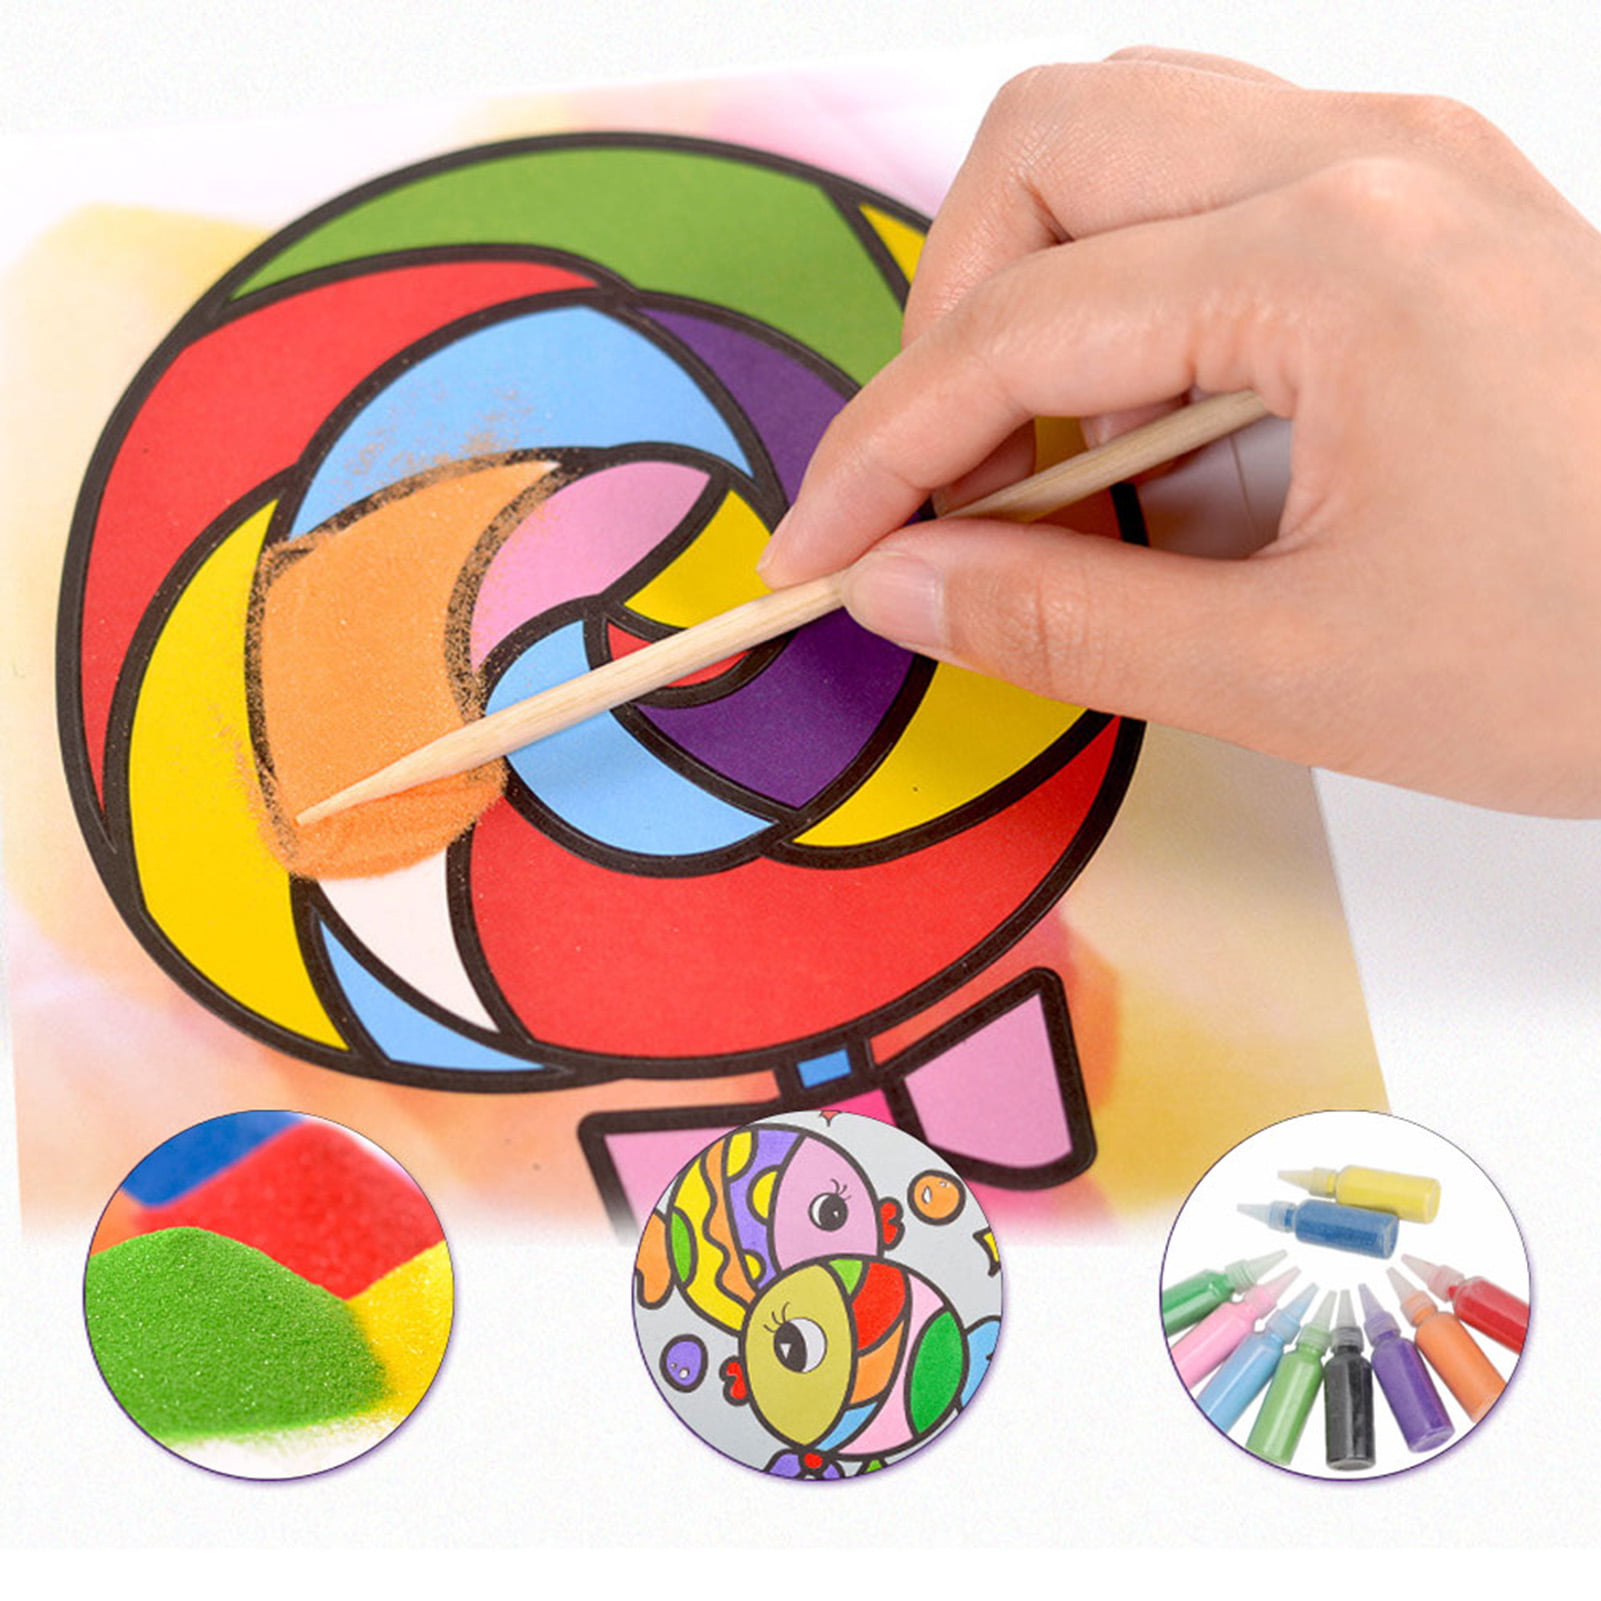 Genius Art Sand Art Painting Kits for Kids - Learn The Seasons